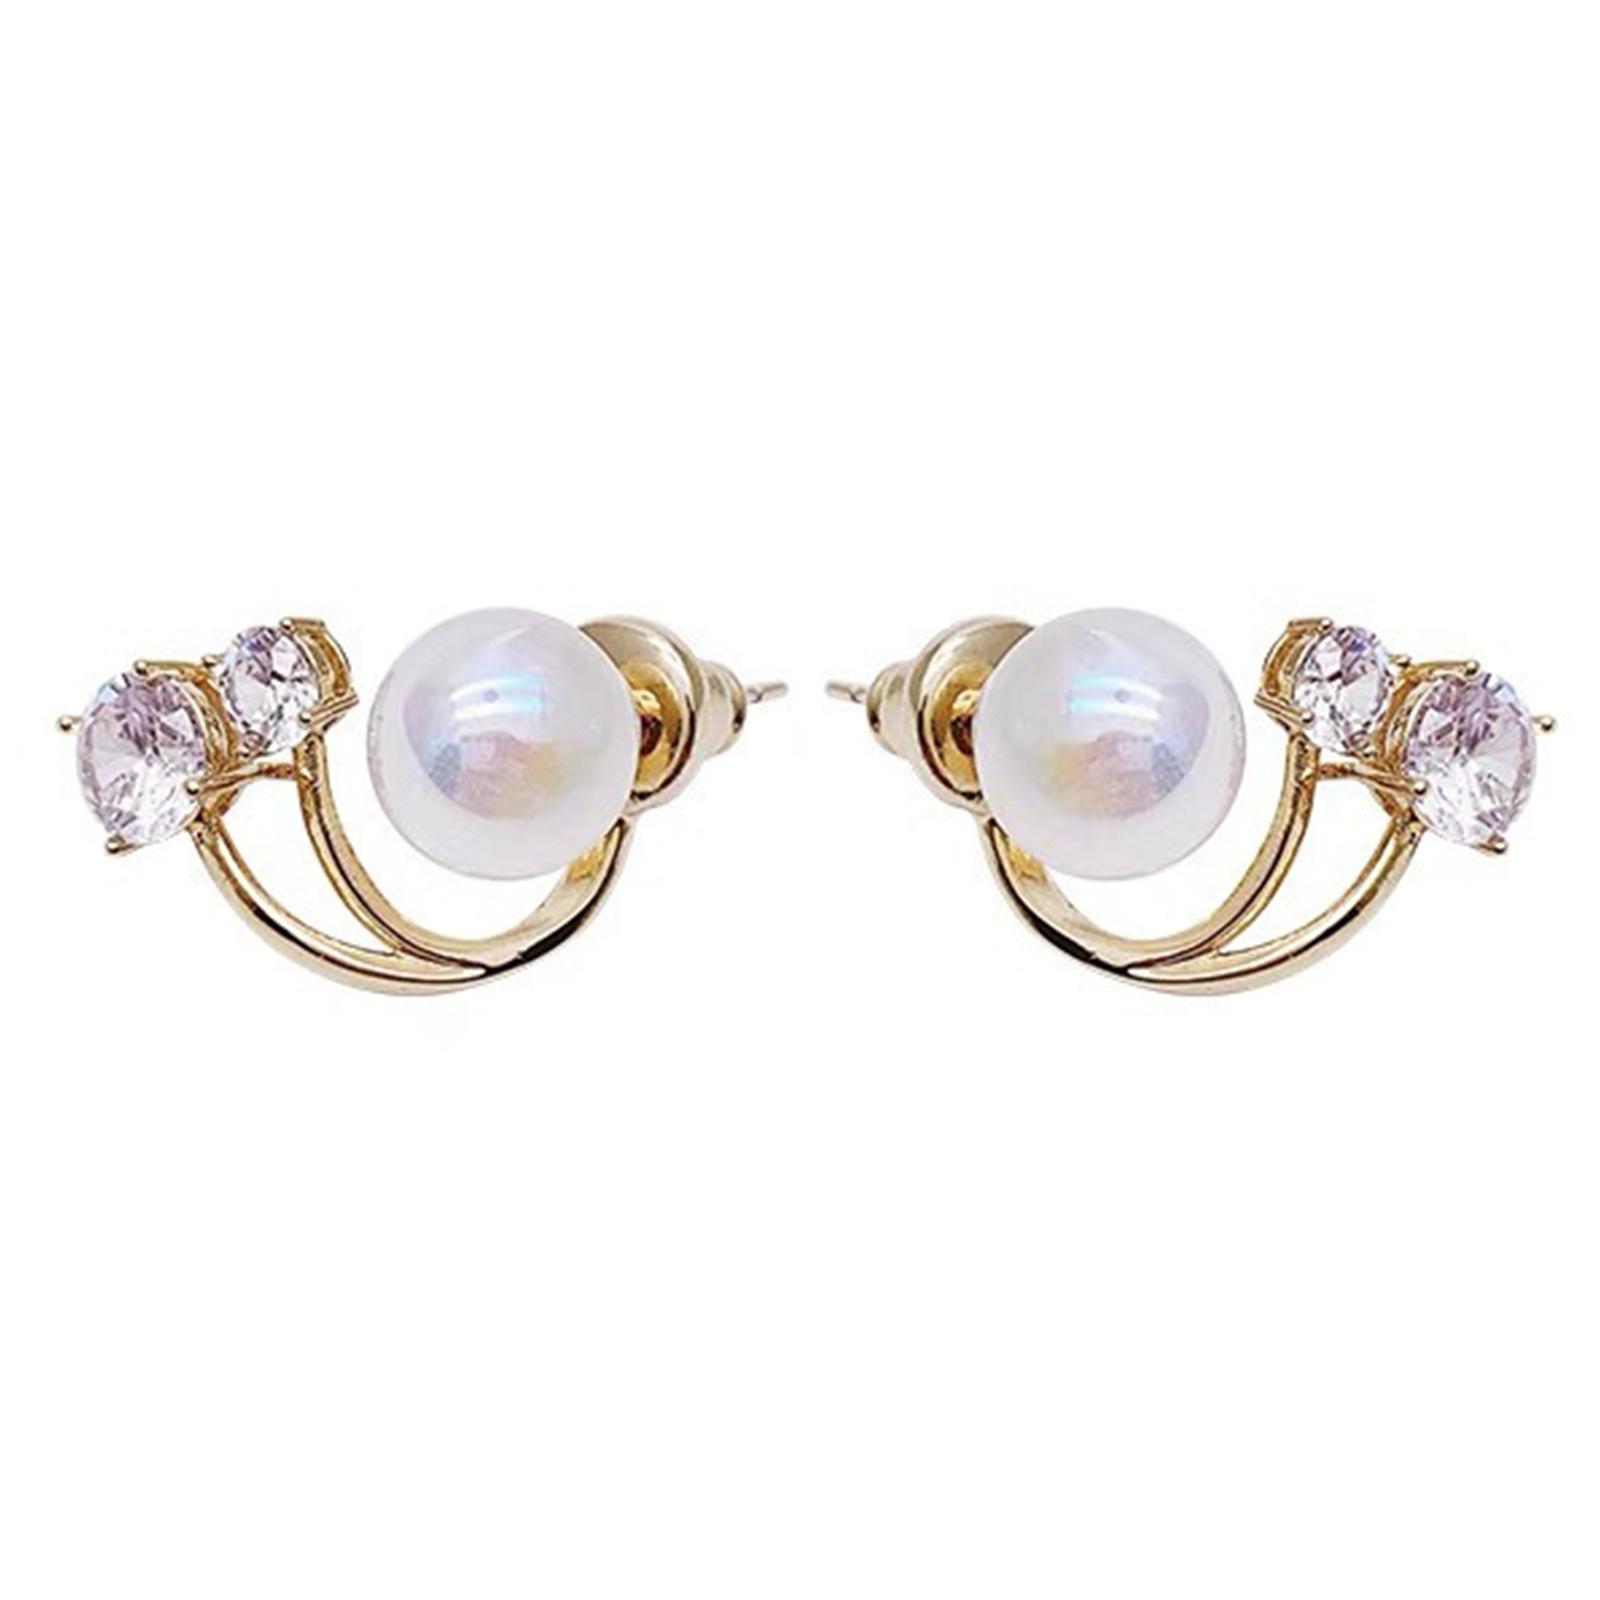 Fashion Rhinestone Crystal Pearl Ear Stud Earrings Women Gift Jewelry V4M6 - image 1 of 1